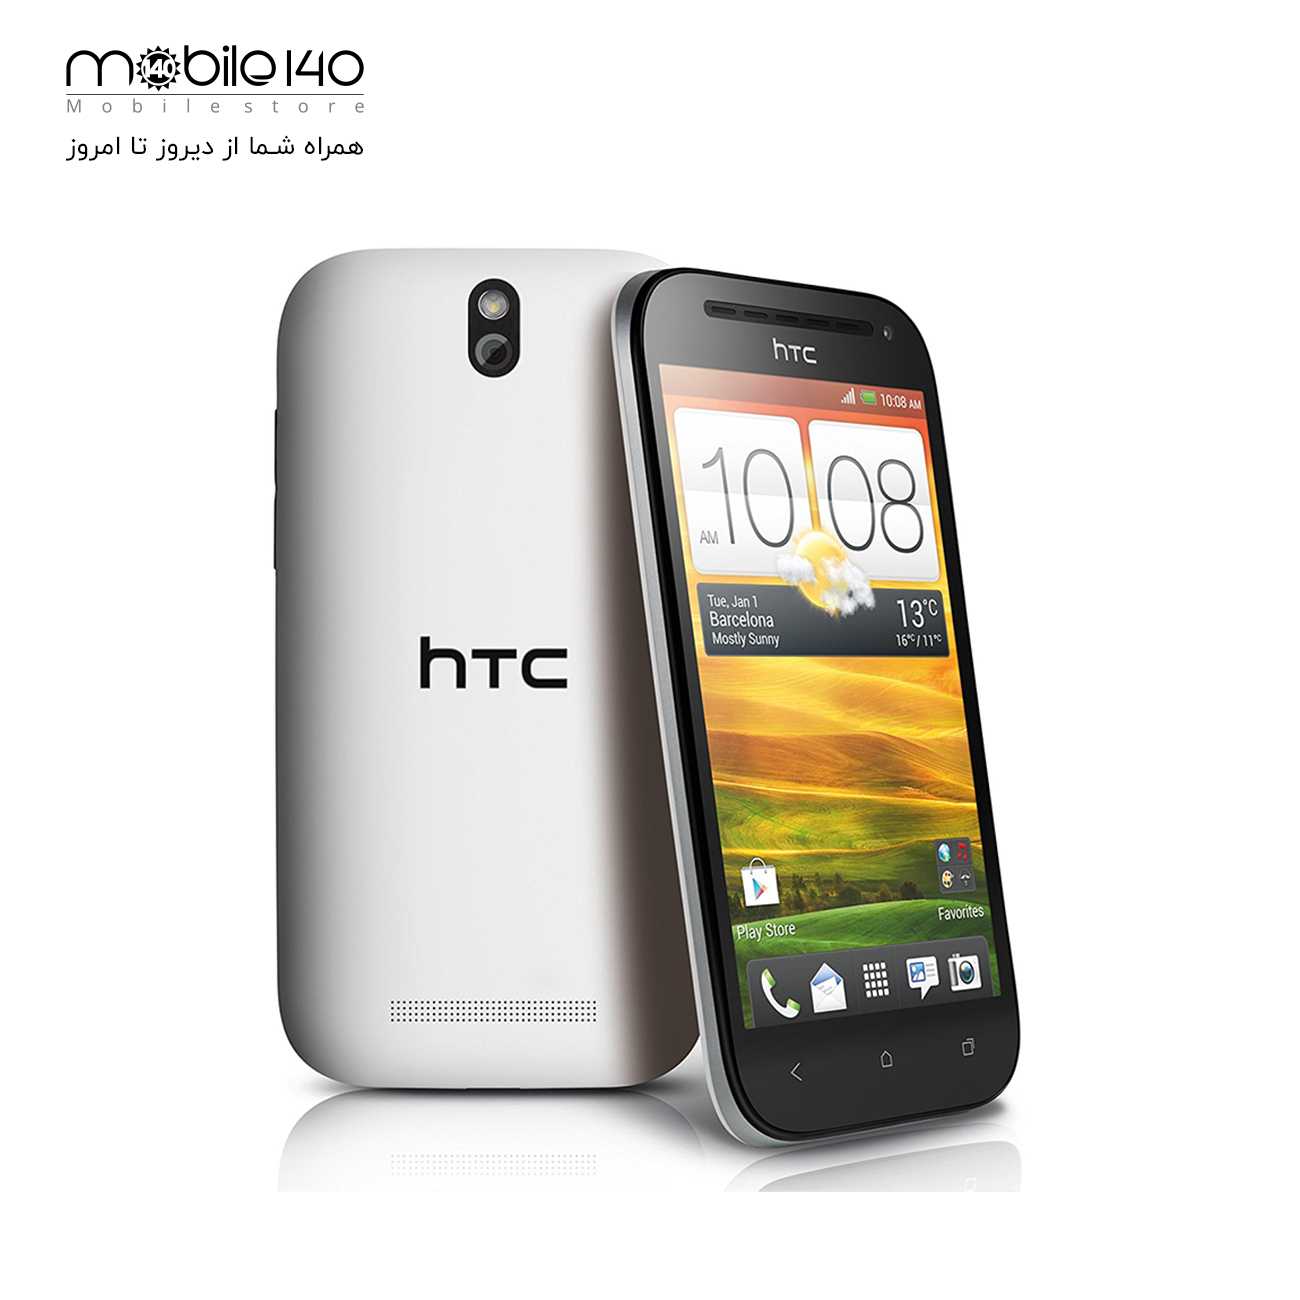 HTC One SV 2